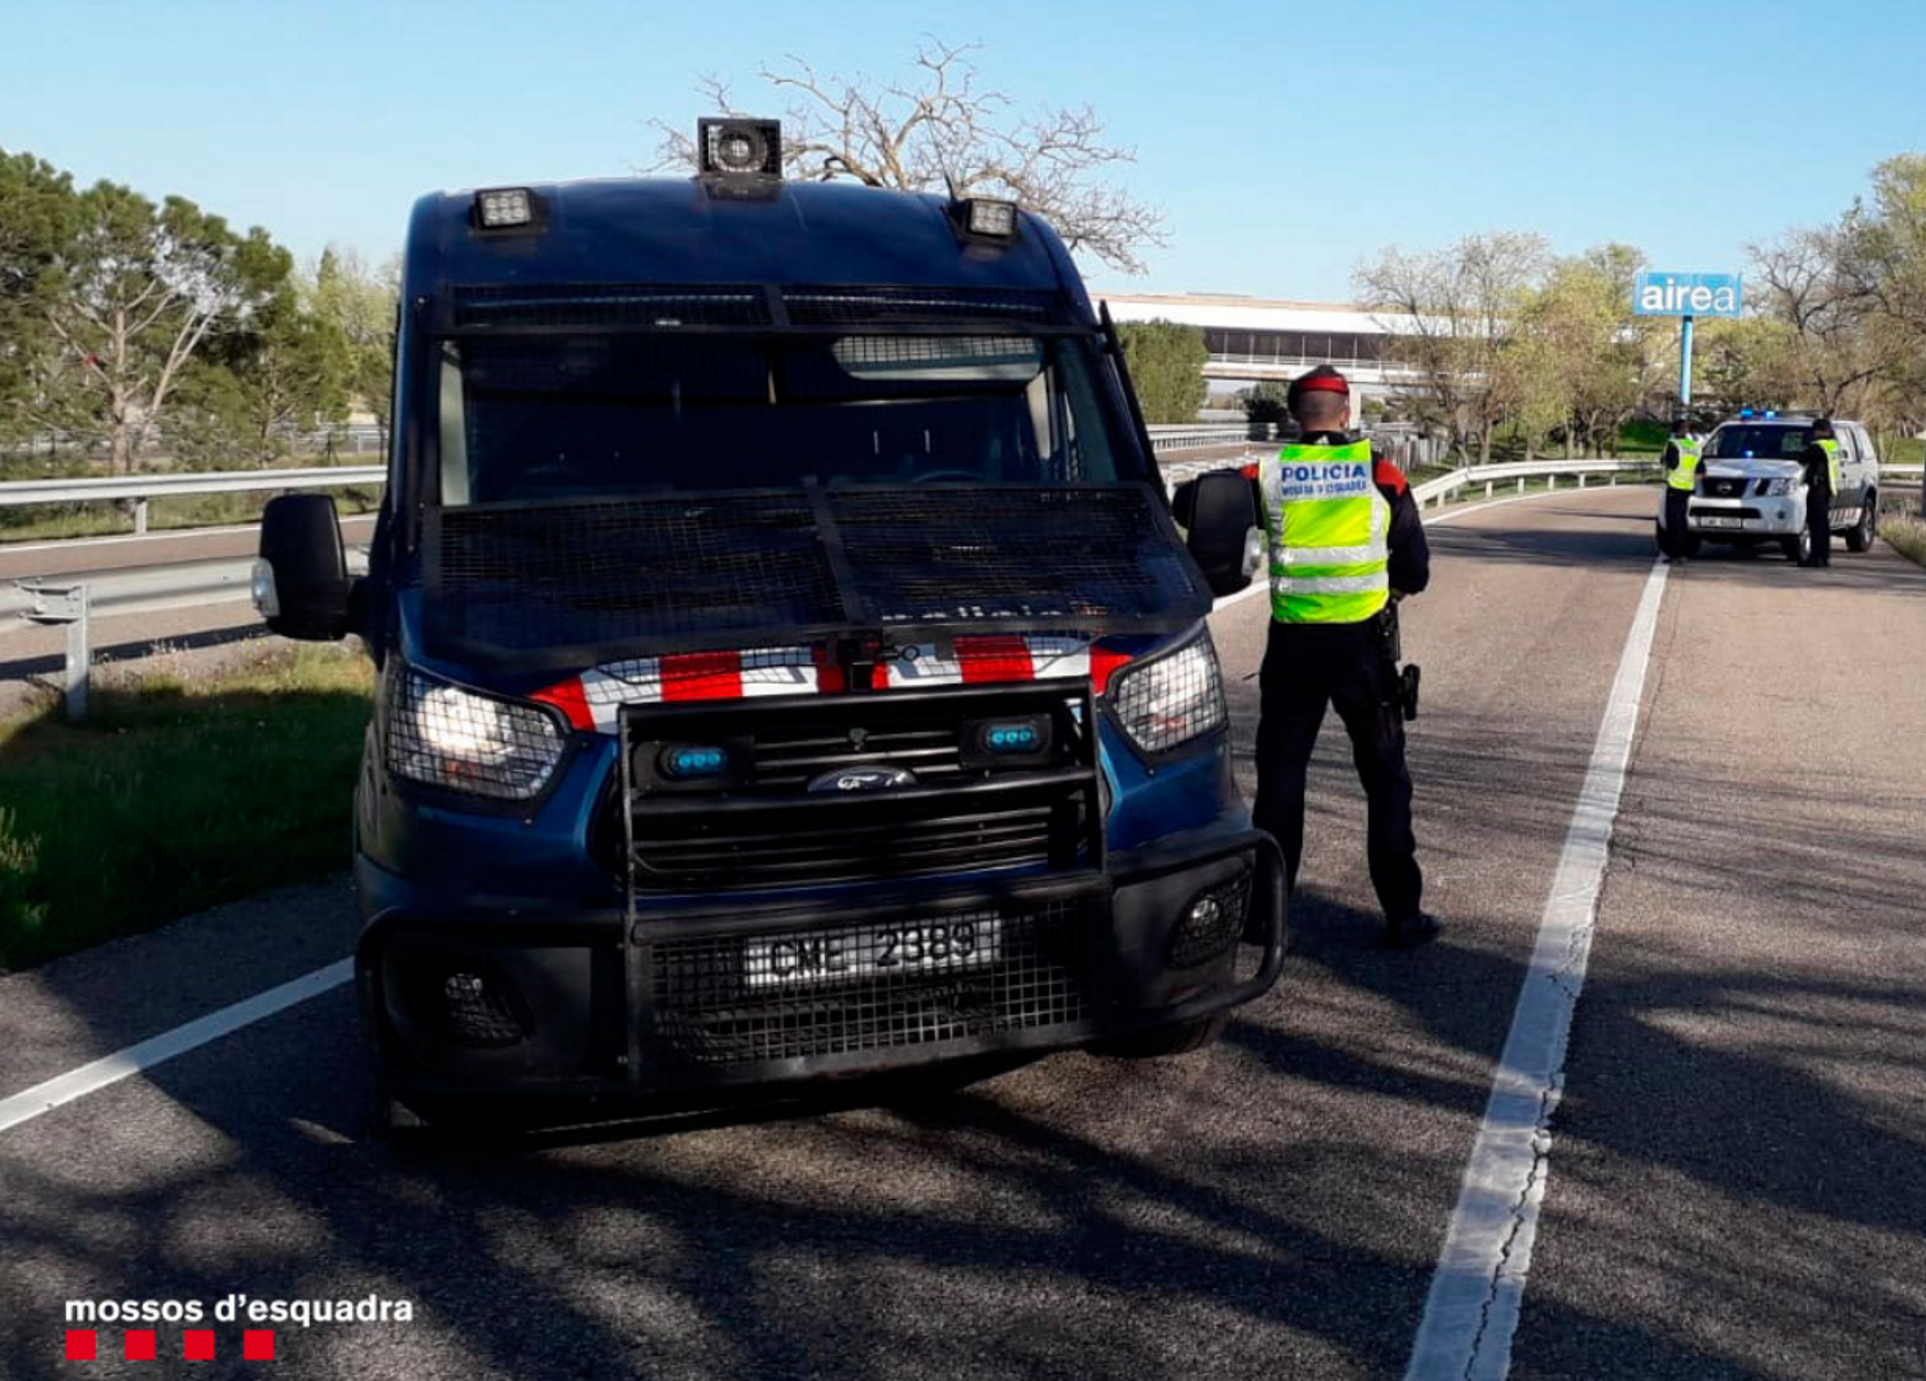 Mossos d'Esquadra police begin coronavirus checks on vehicles entering Catalonia